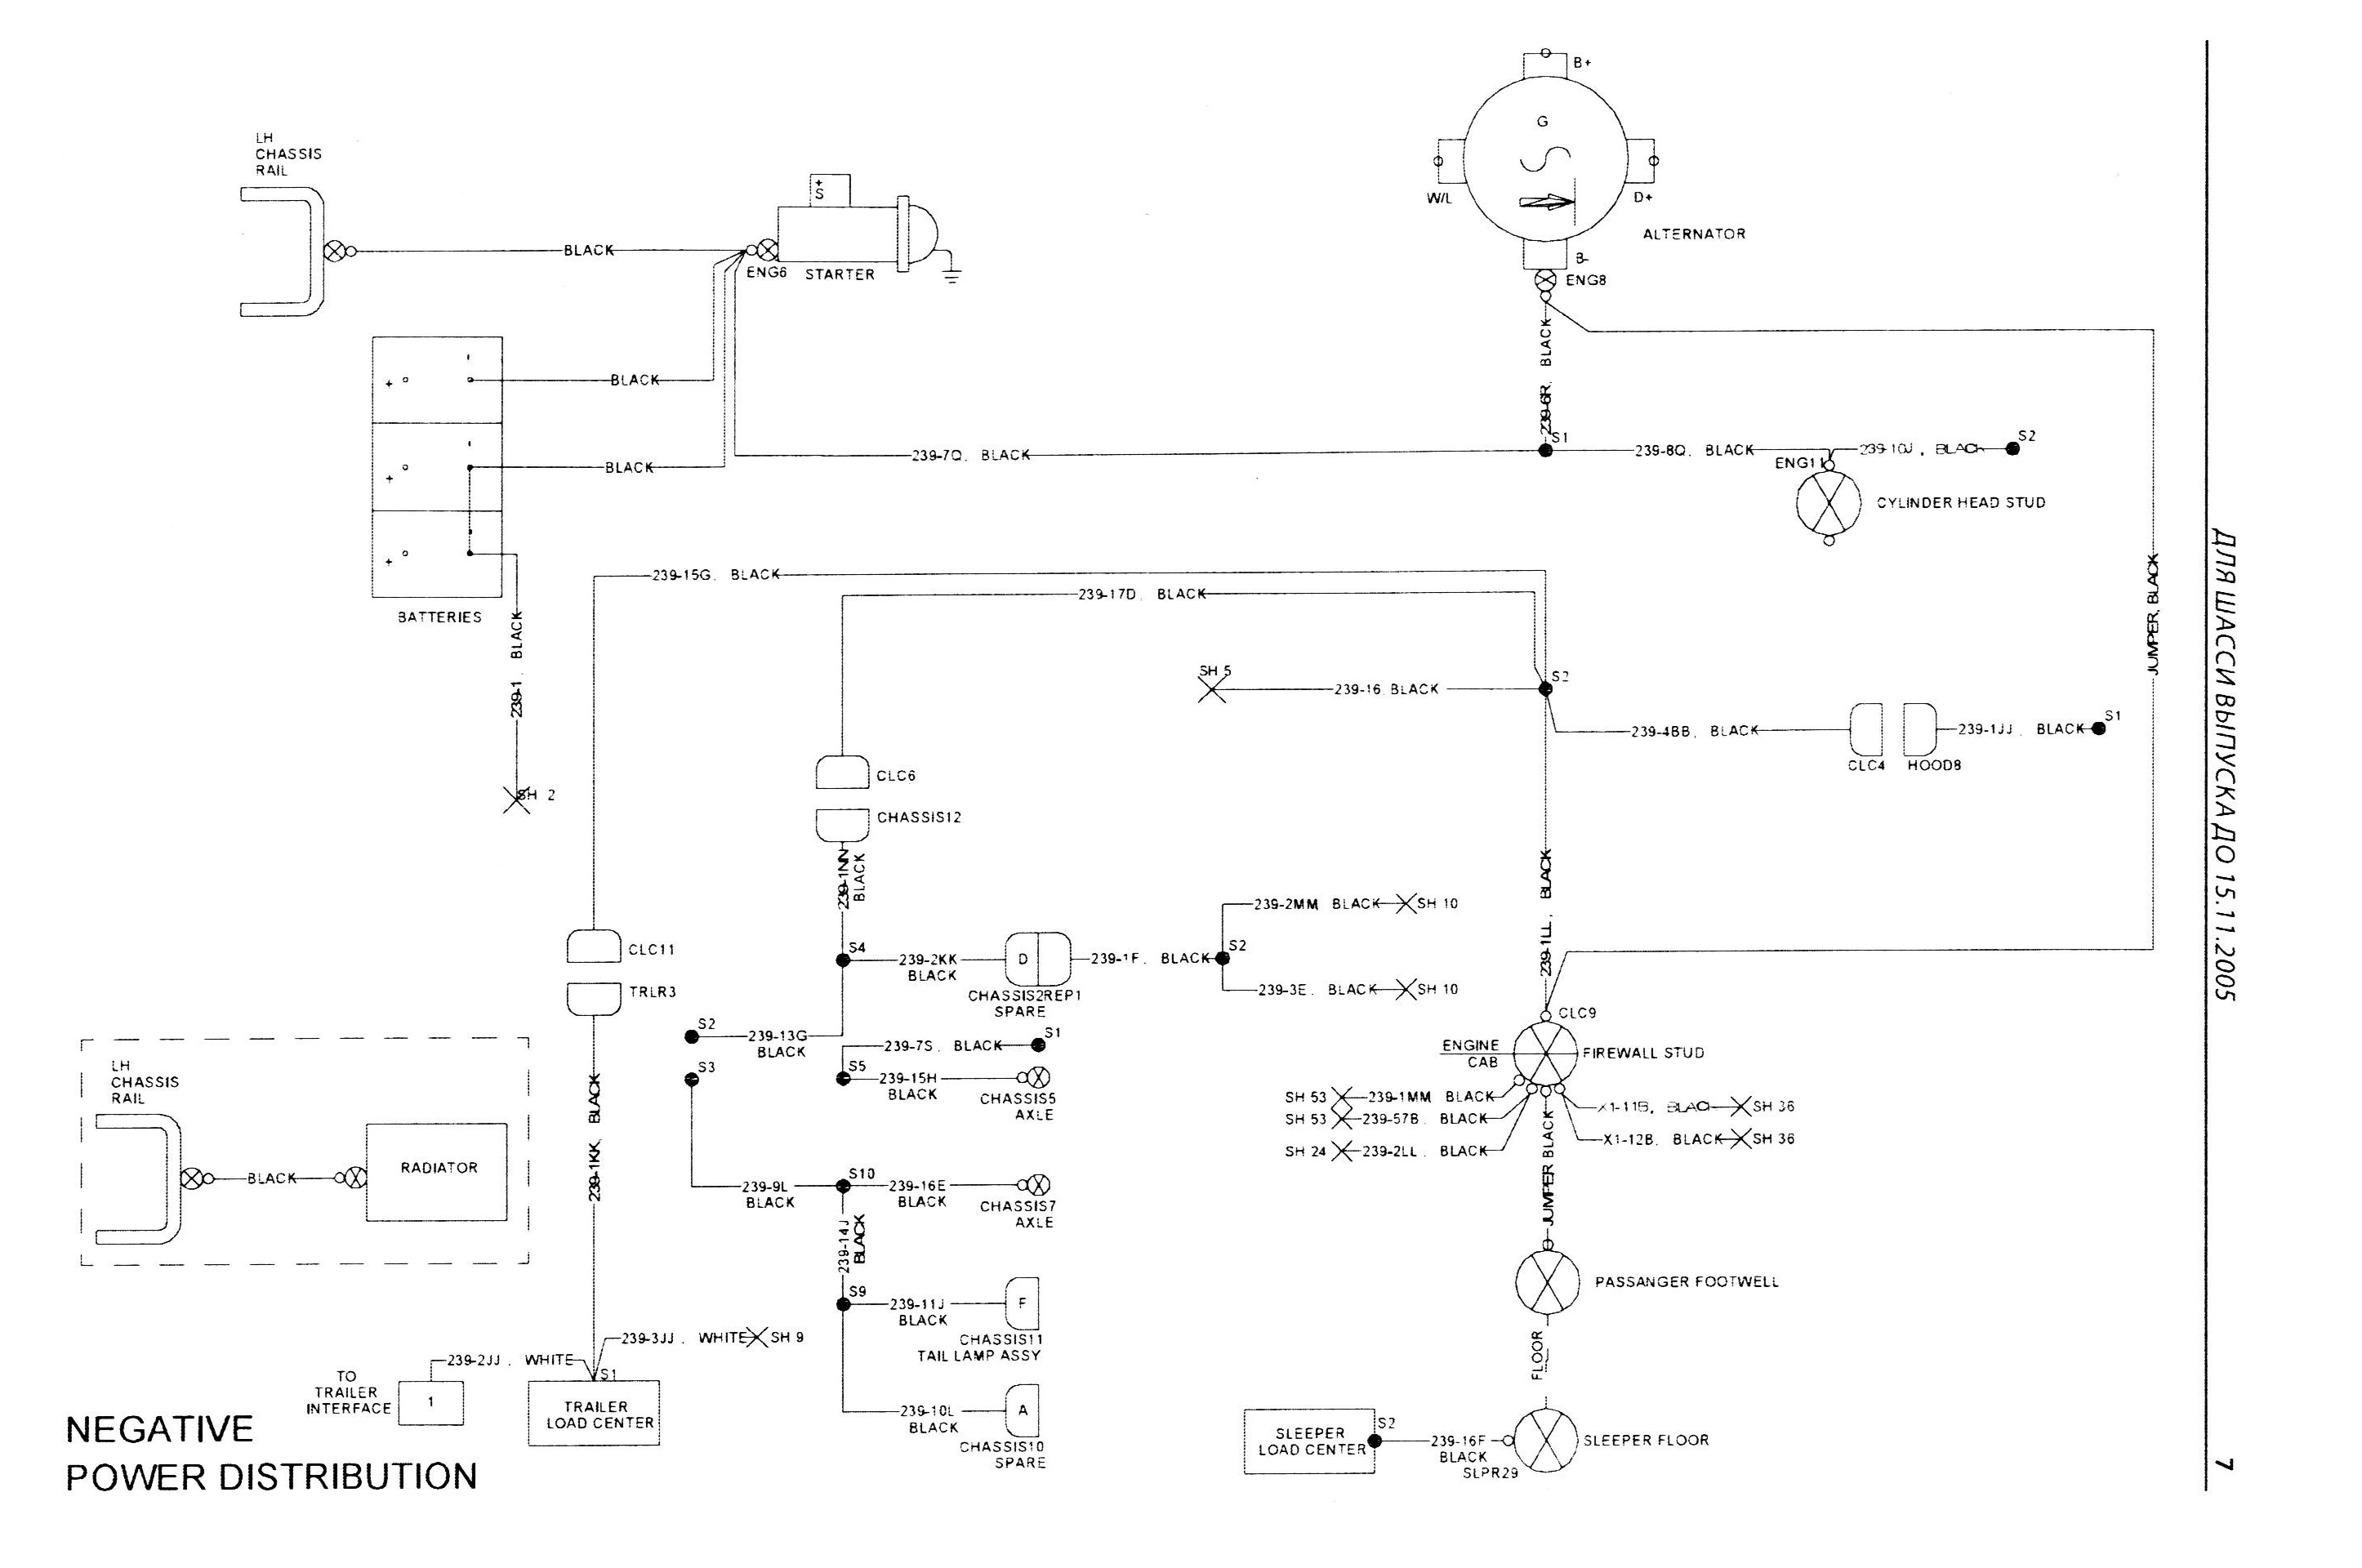 56 Peterbilt wiring schematic PDF - Truck manual, wiring diagrams, fault  codes PDF free download  2001 Peterbilt 379 Headlight Wiring Diagram    9 Avia Trucks Service Manuals